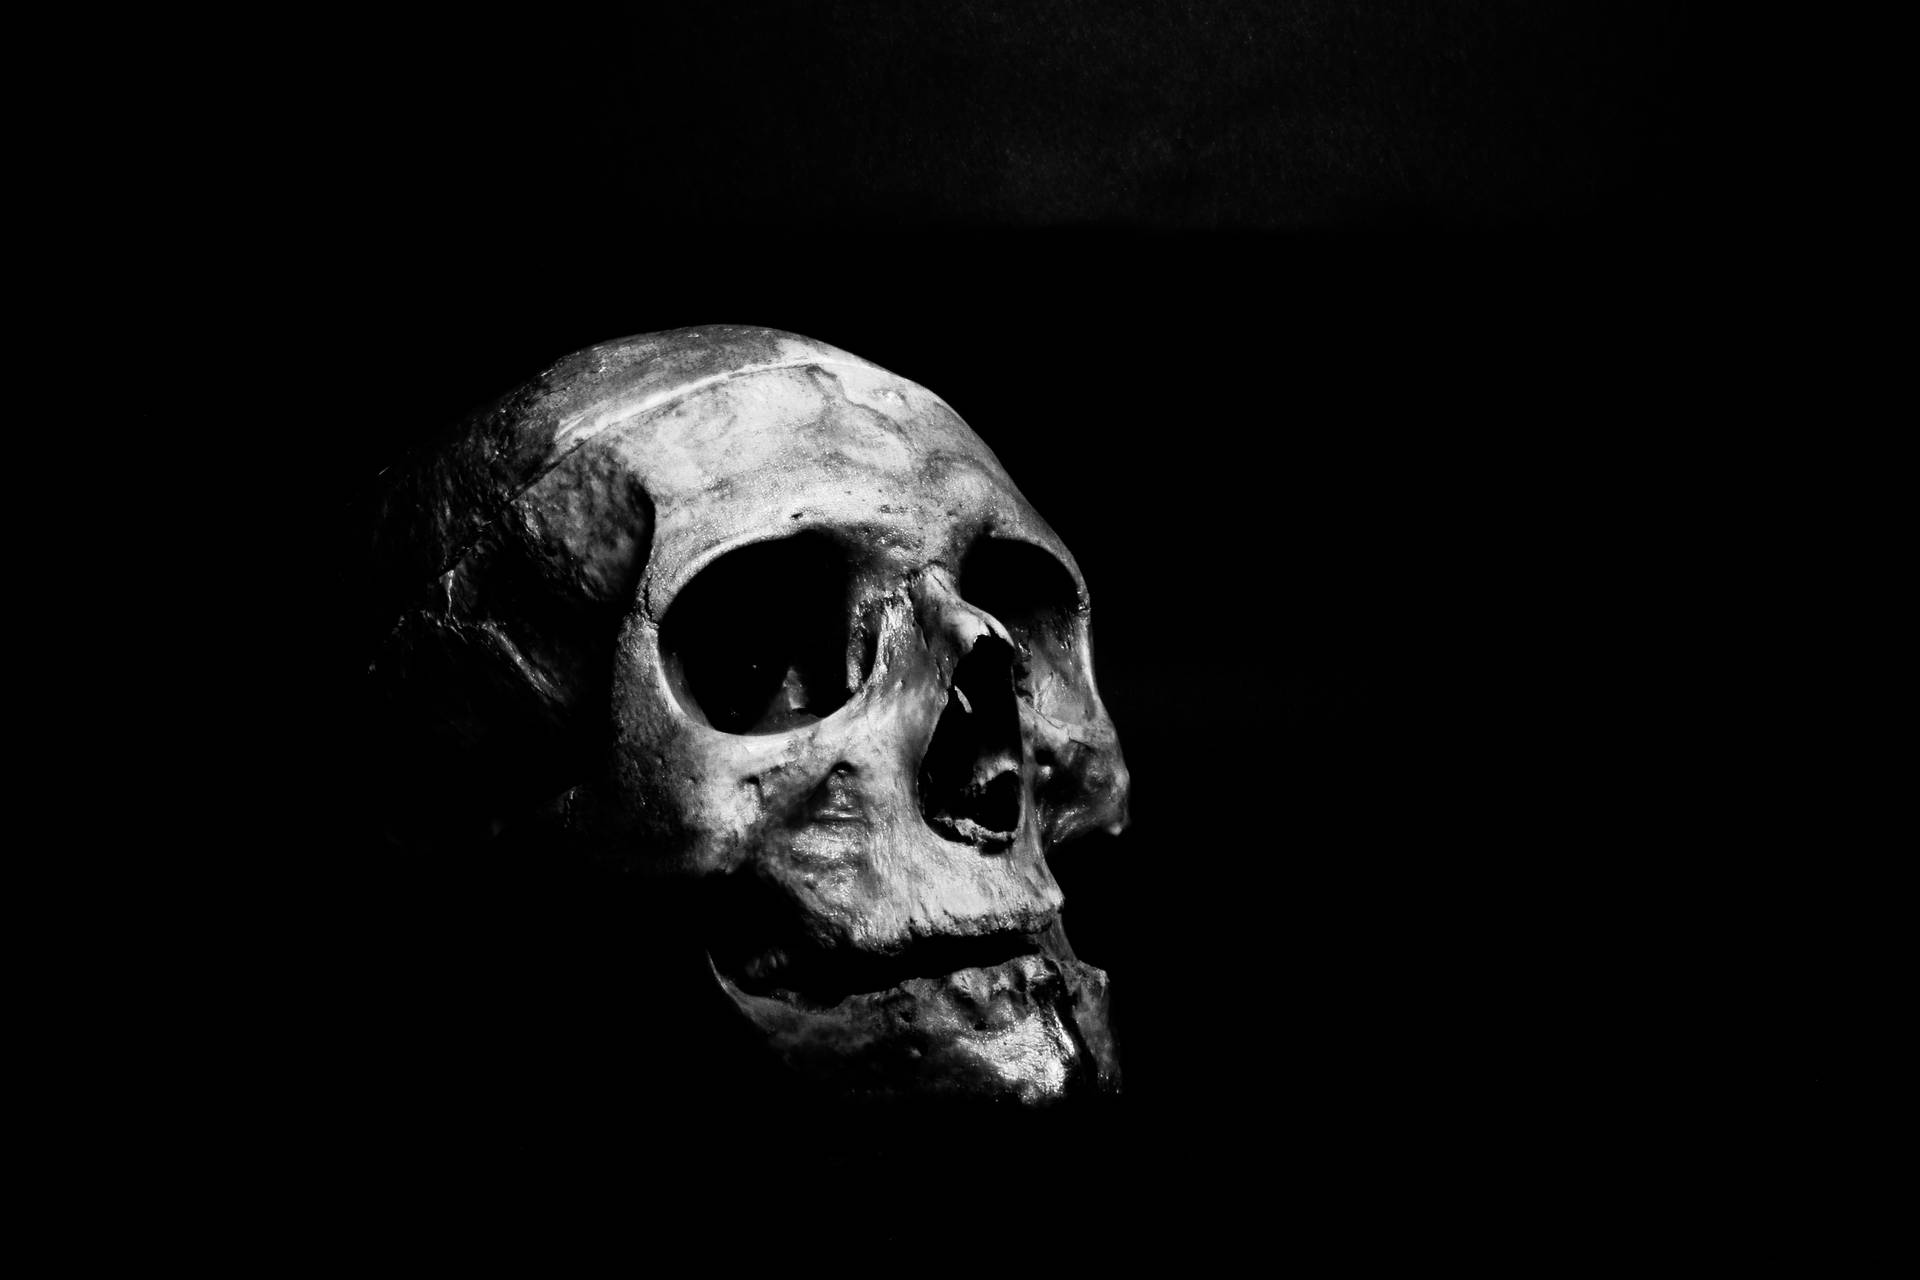 Embodying Melancholy: A Solemn Skull in Solitude Wallpaper